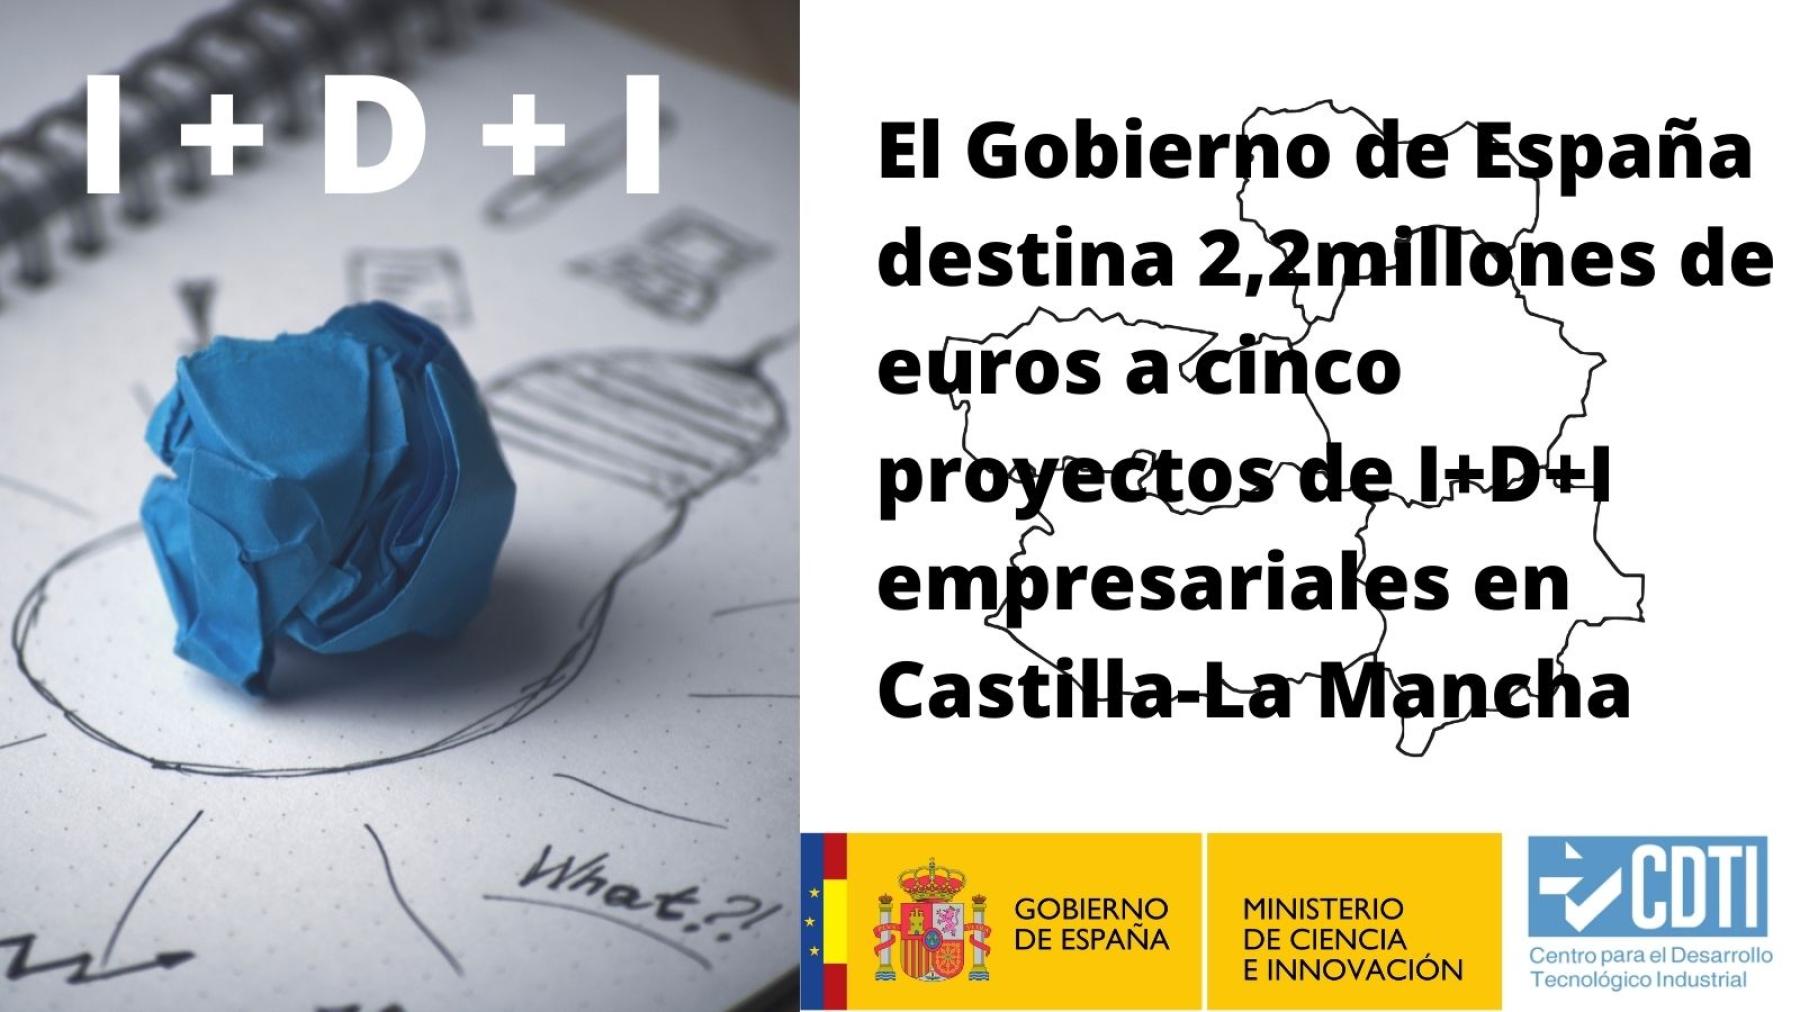 El Gobierno de España destina 2,2 millones de euros a cinco proyectos de I+D+I empresariales en Castilla-La Mancha